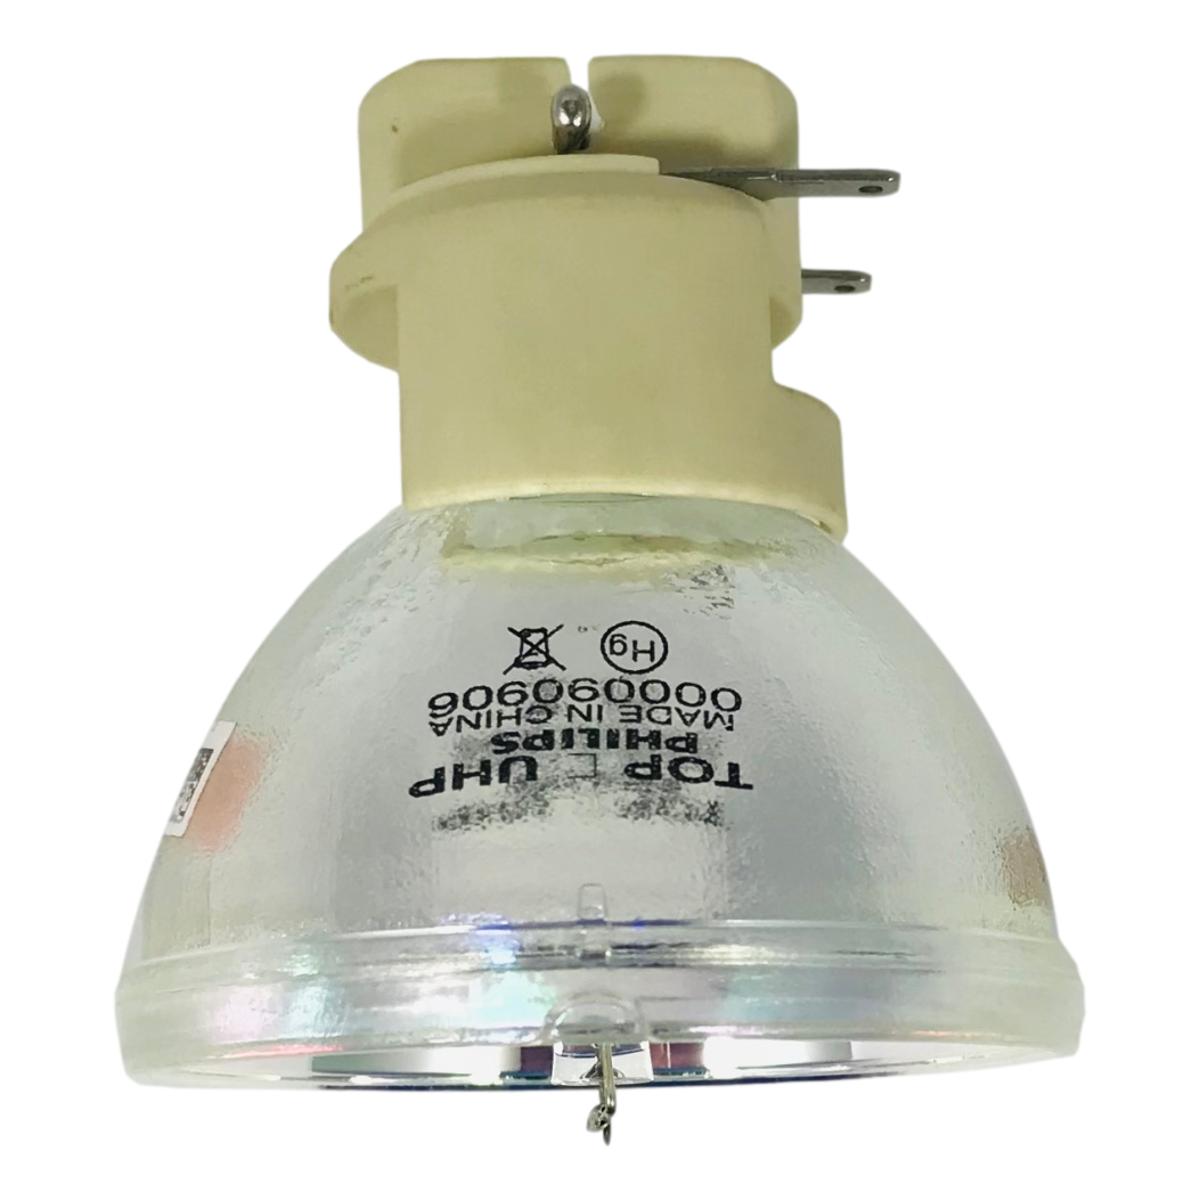 Viewsonic RLC-104 Philips Projector Bare Lamp